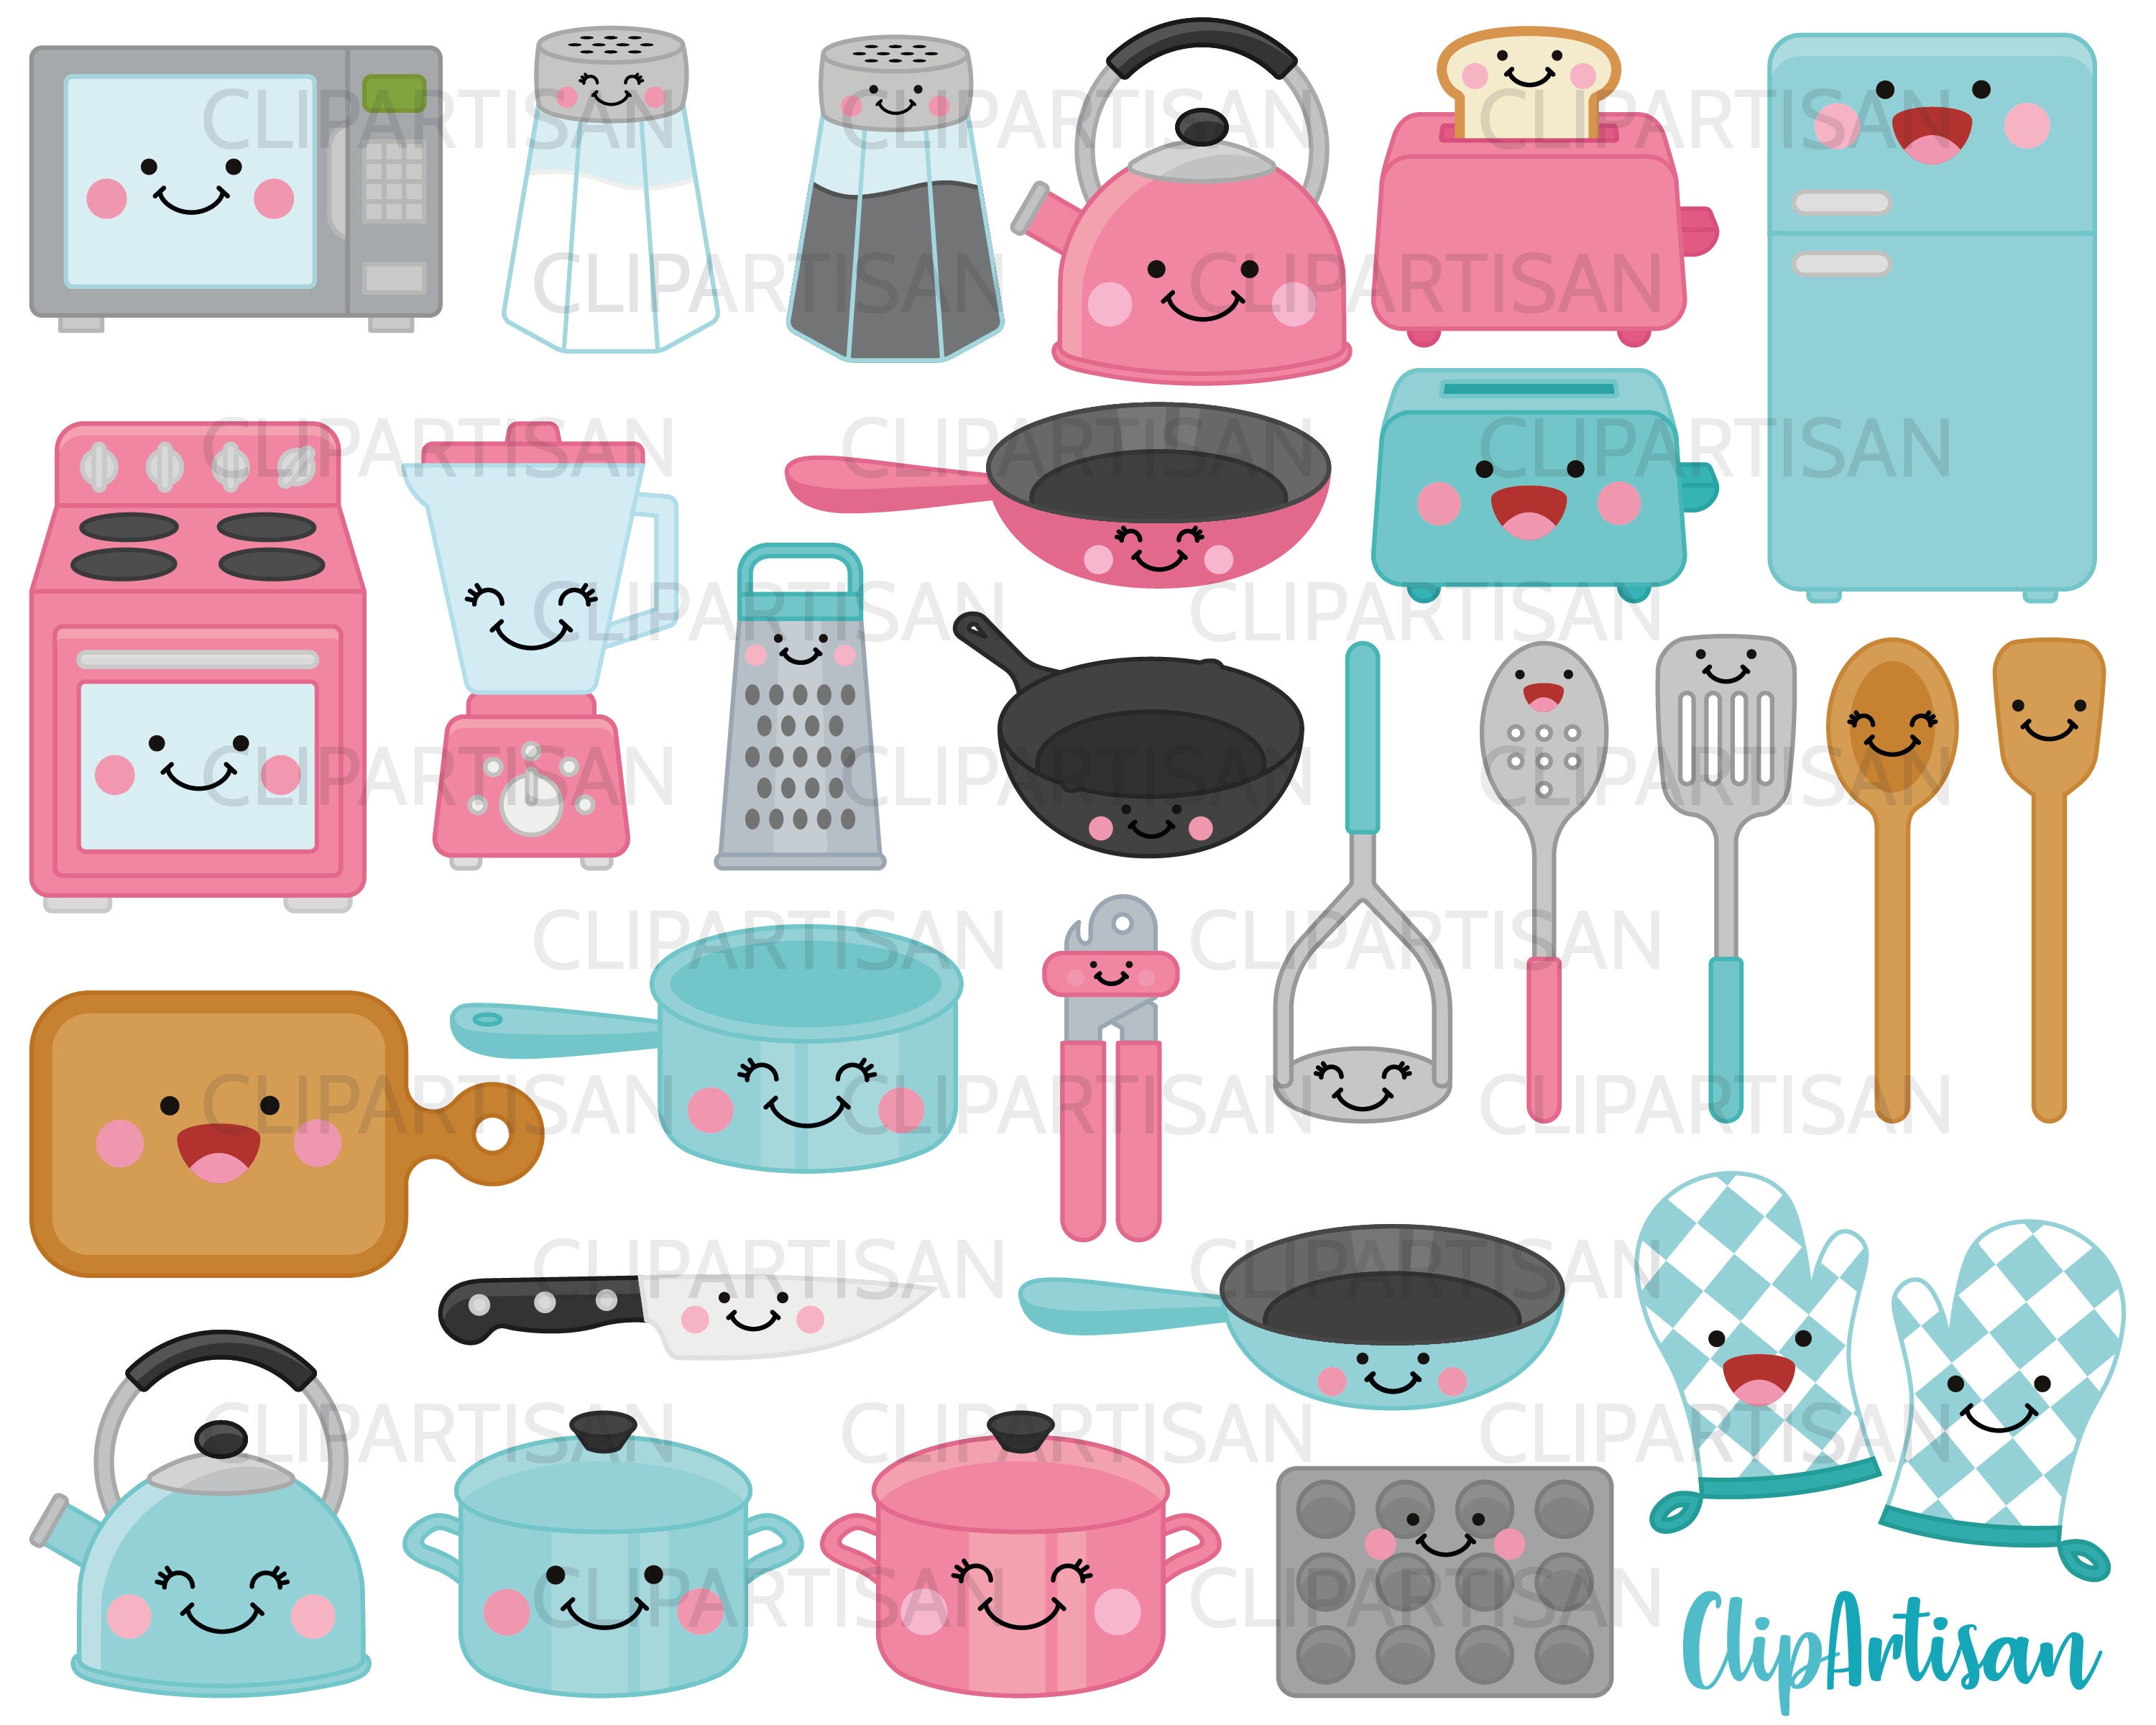 MBVBN Kawaii Digital Scale Kawaii Kitchen Accessories Kawaii Gifts Pink  Kitchen Supplies Cute Kitchen Appliance (Pink)